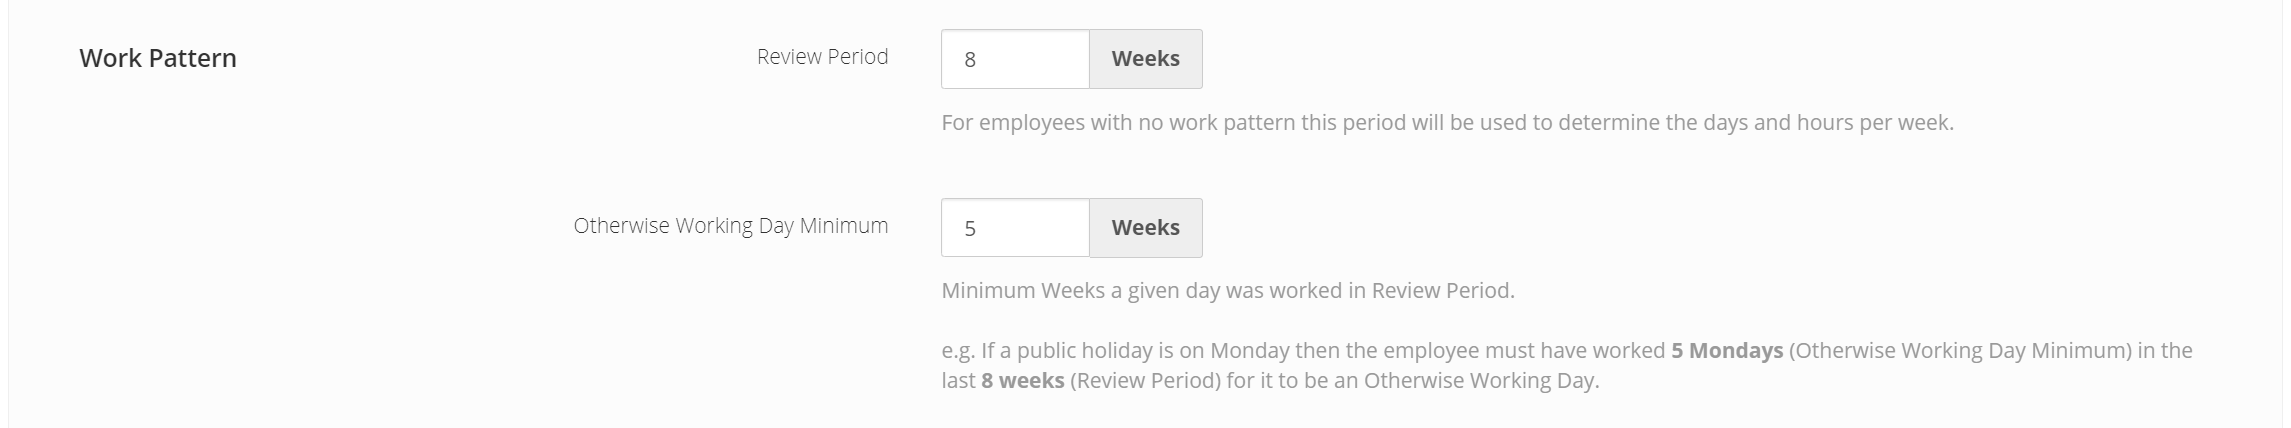 Payroll_Settings_-_Work_Pattern.png